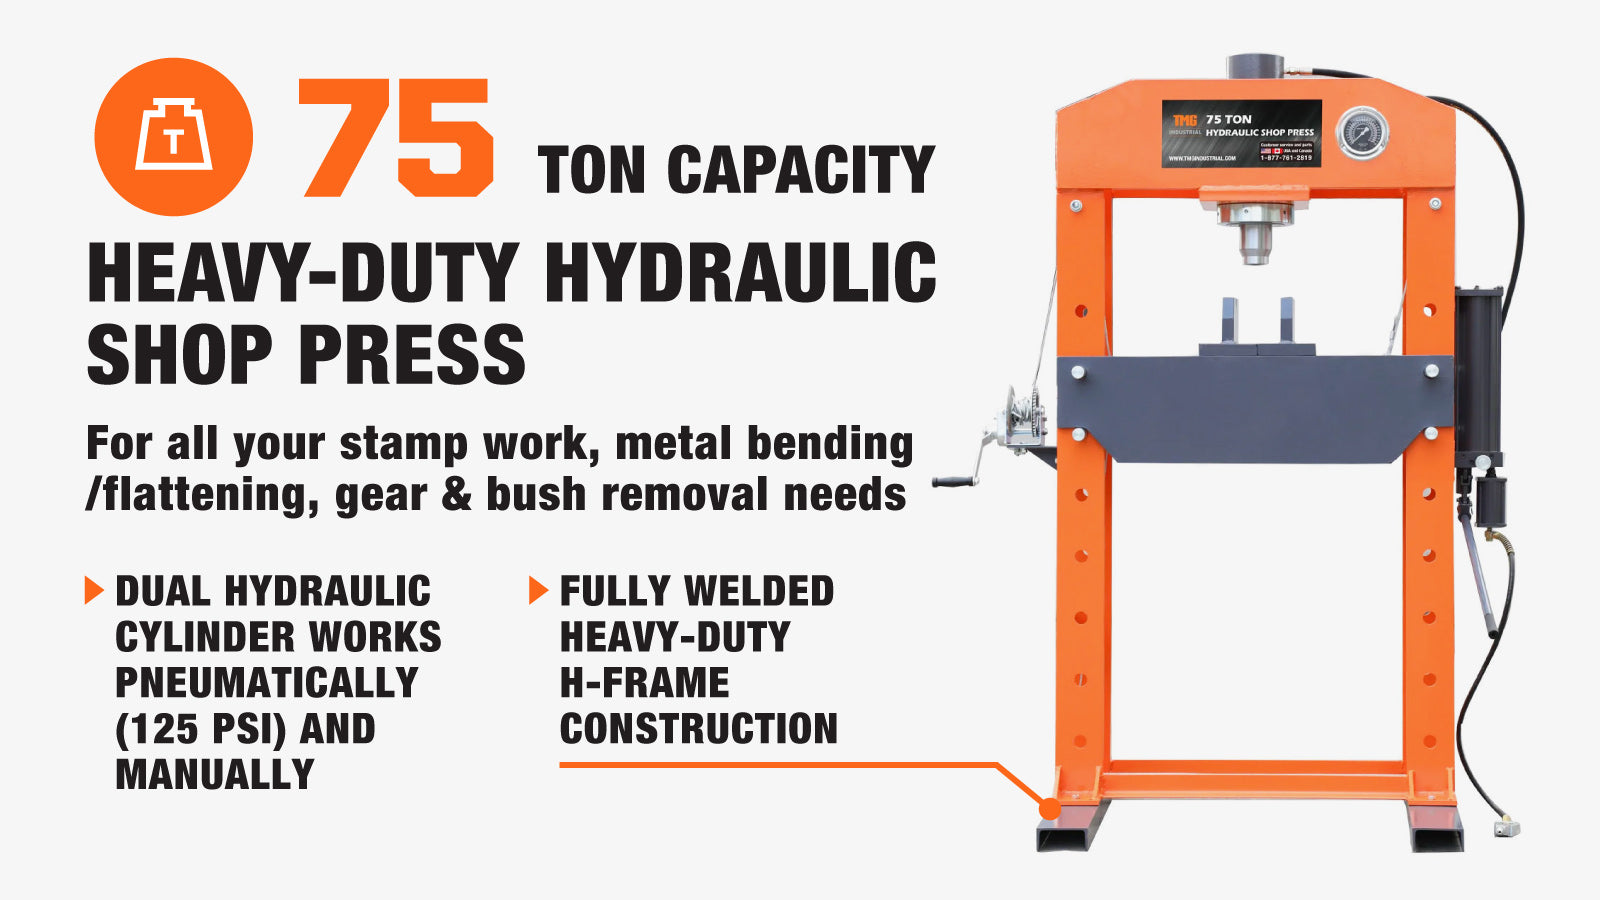 TMG Industrial 75 Ton Capacity Hydraulic Shop Press, Heavy Duty Pressing, Fully Welded H-Frame, Air & Manual Dual Operation, TMG-SP75-description-image